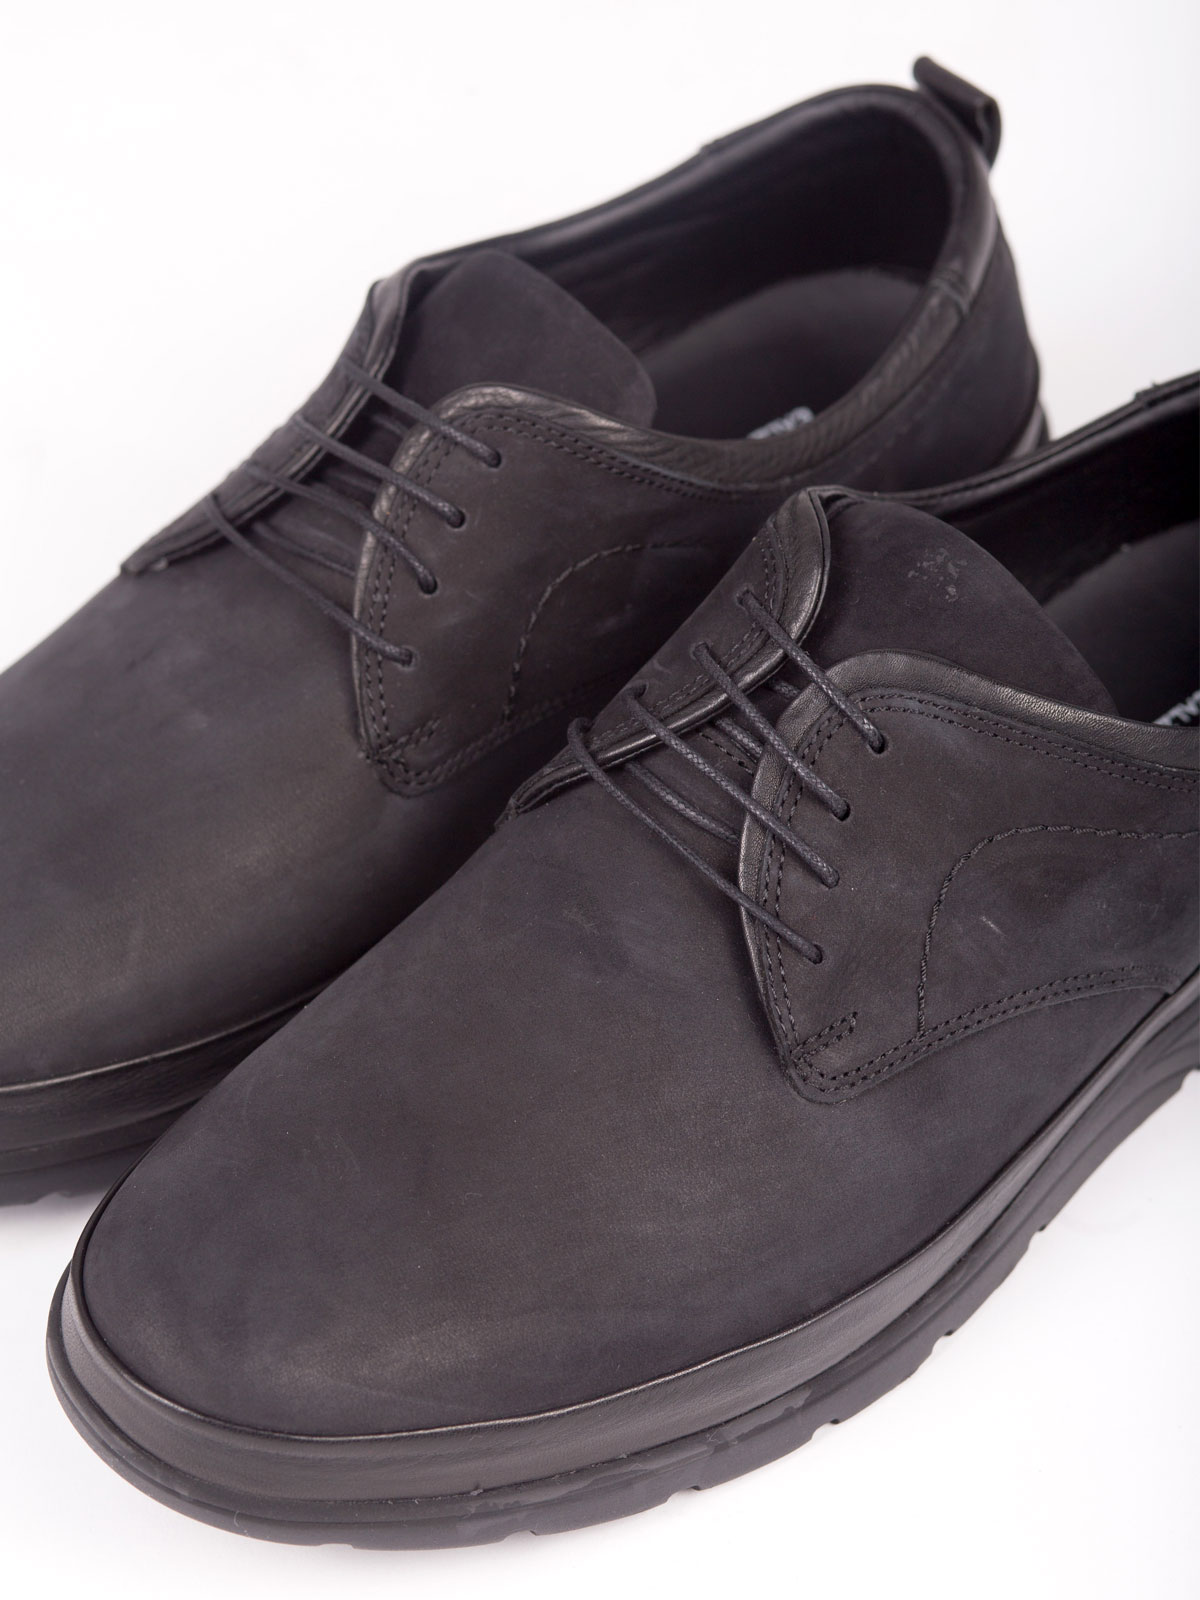 Pantofi de piele intoarsa neagra - 81027 - € 24.75 img3